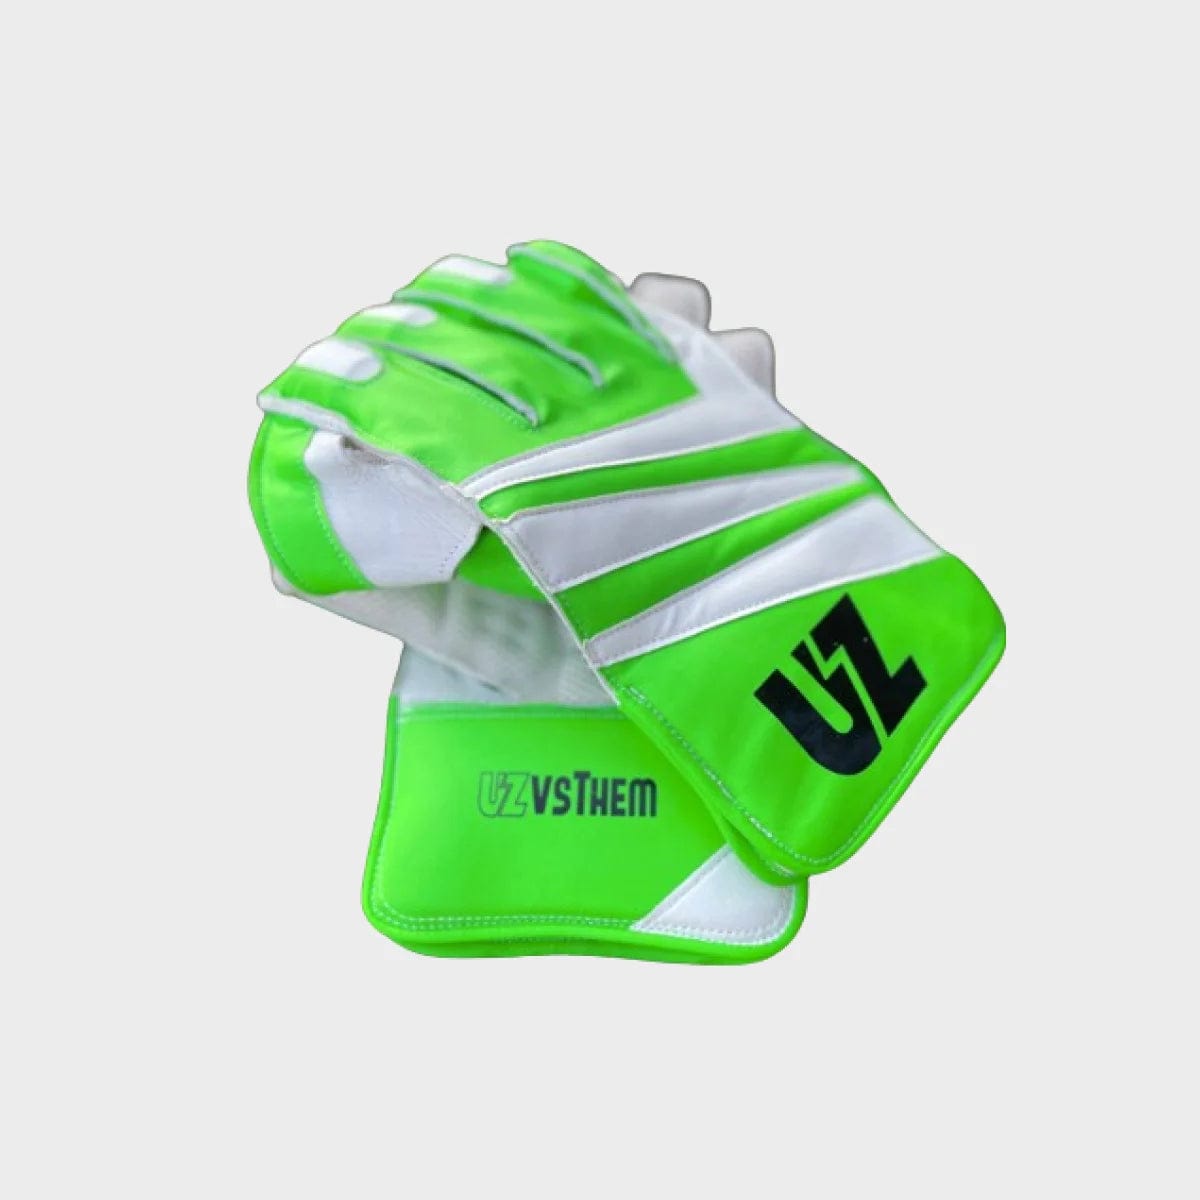 UZ Classic Wicket Keeping Gloves